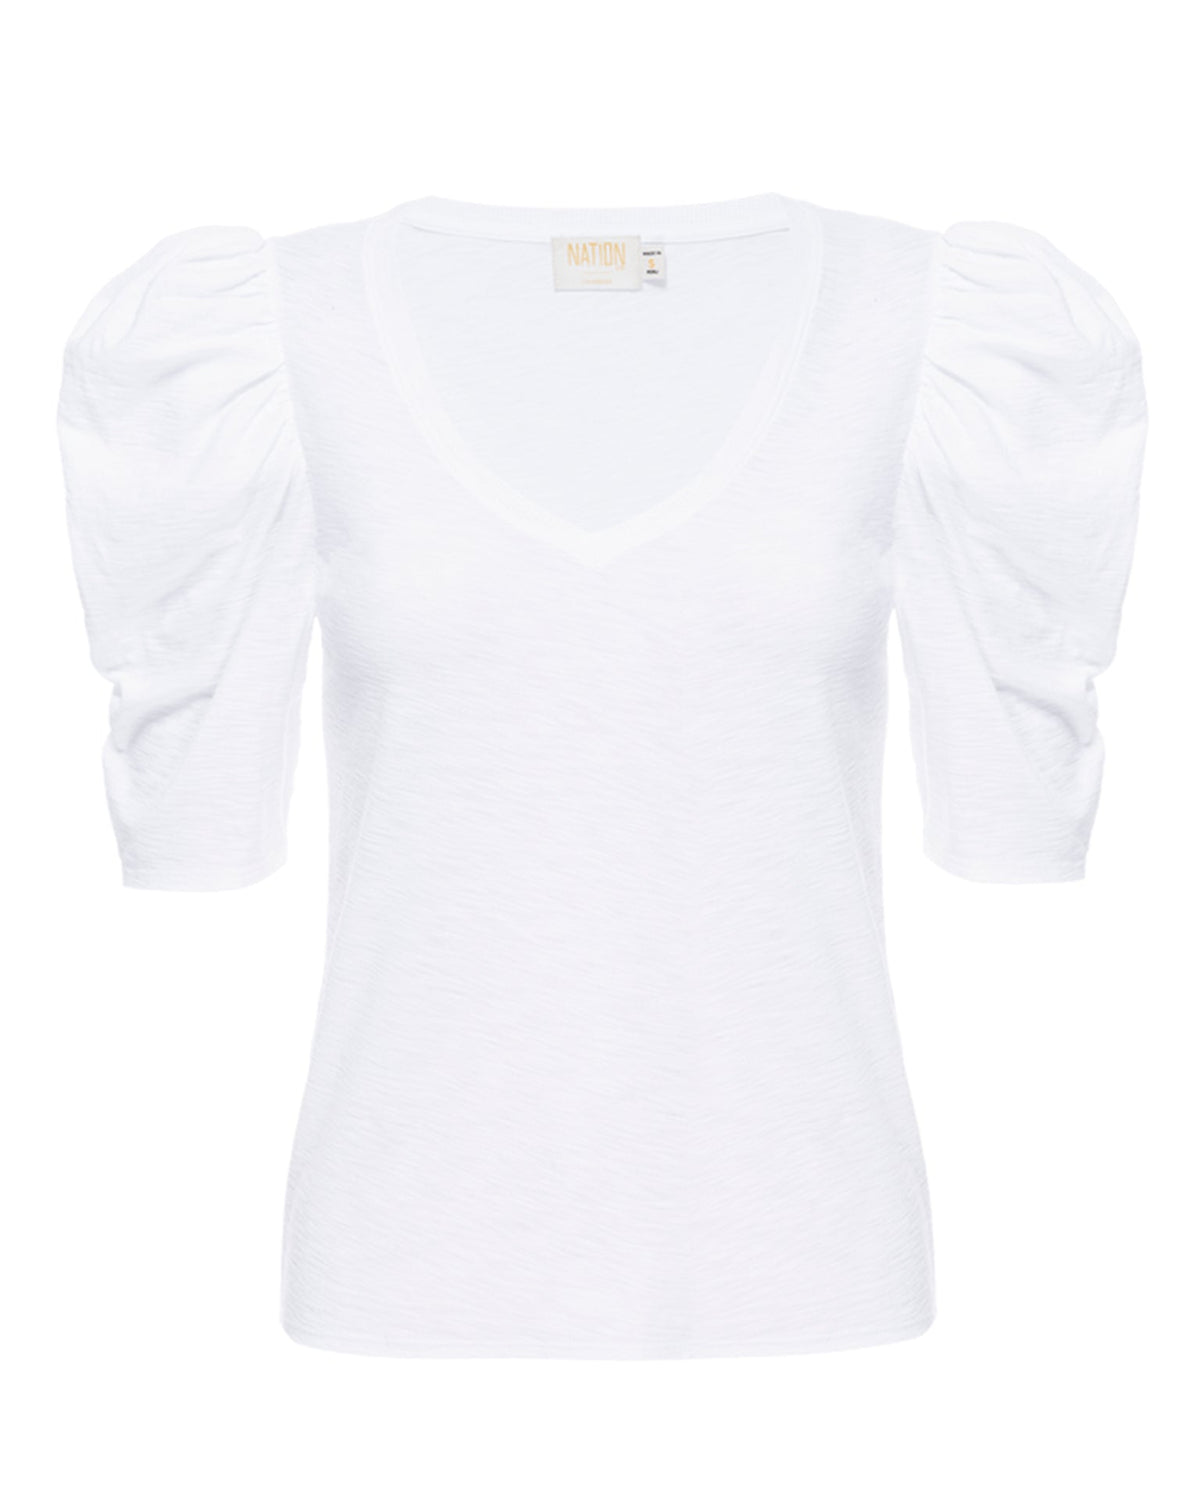 Nation Ltd Clothing Jillian Bold Shoulder V Neck in White